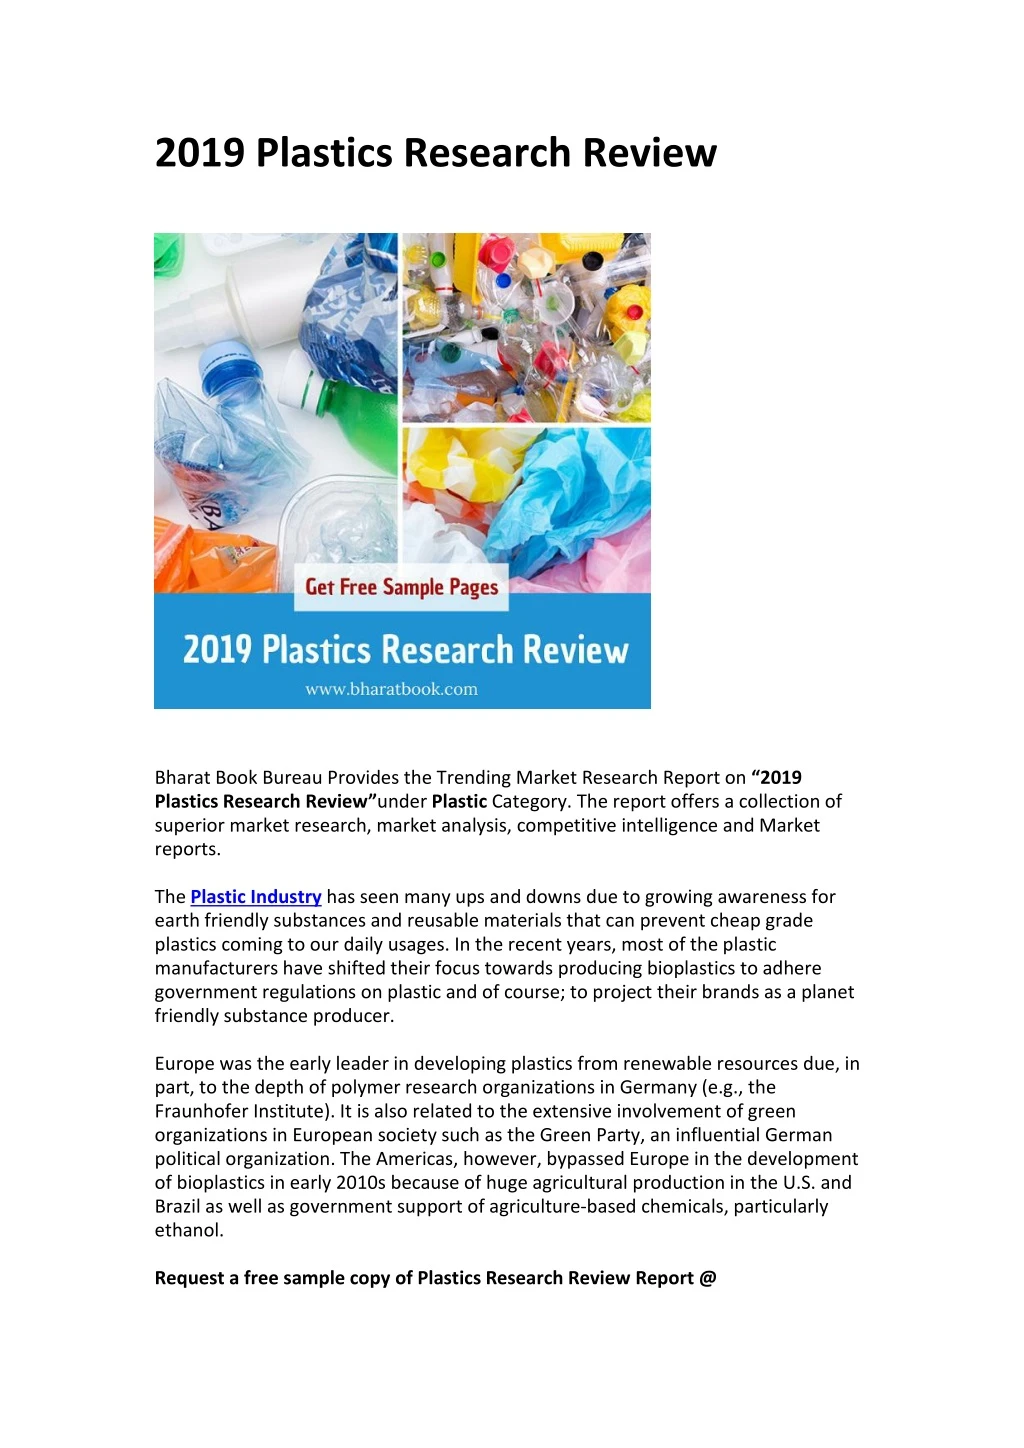 2019 plastics research review